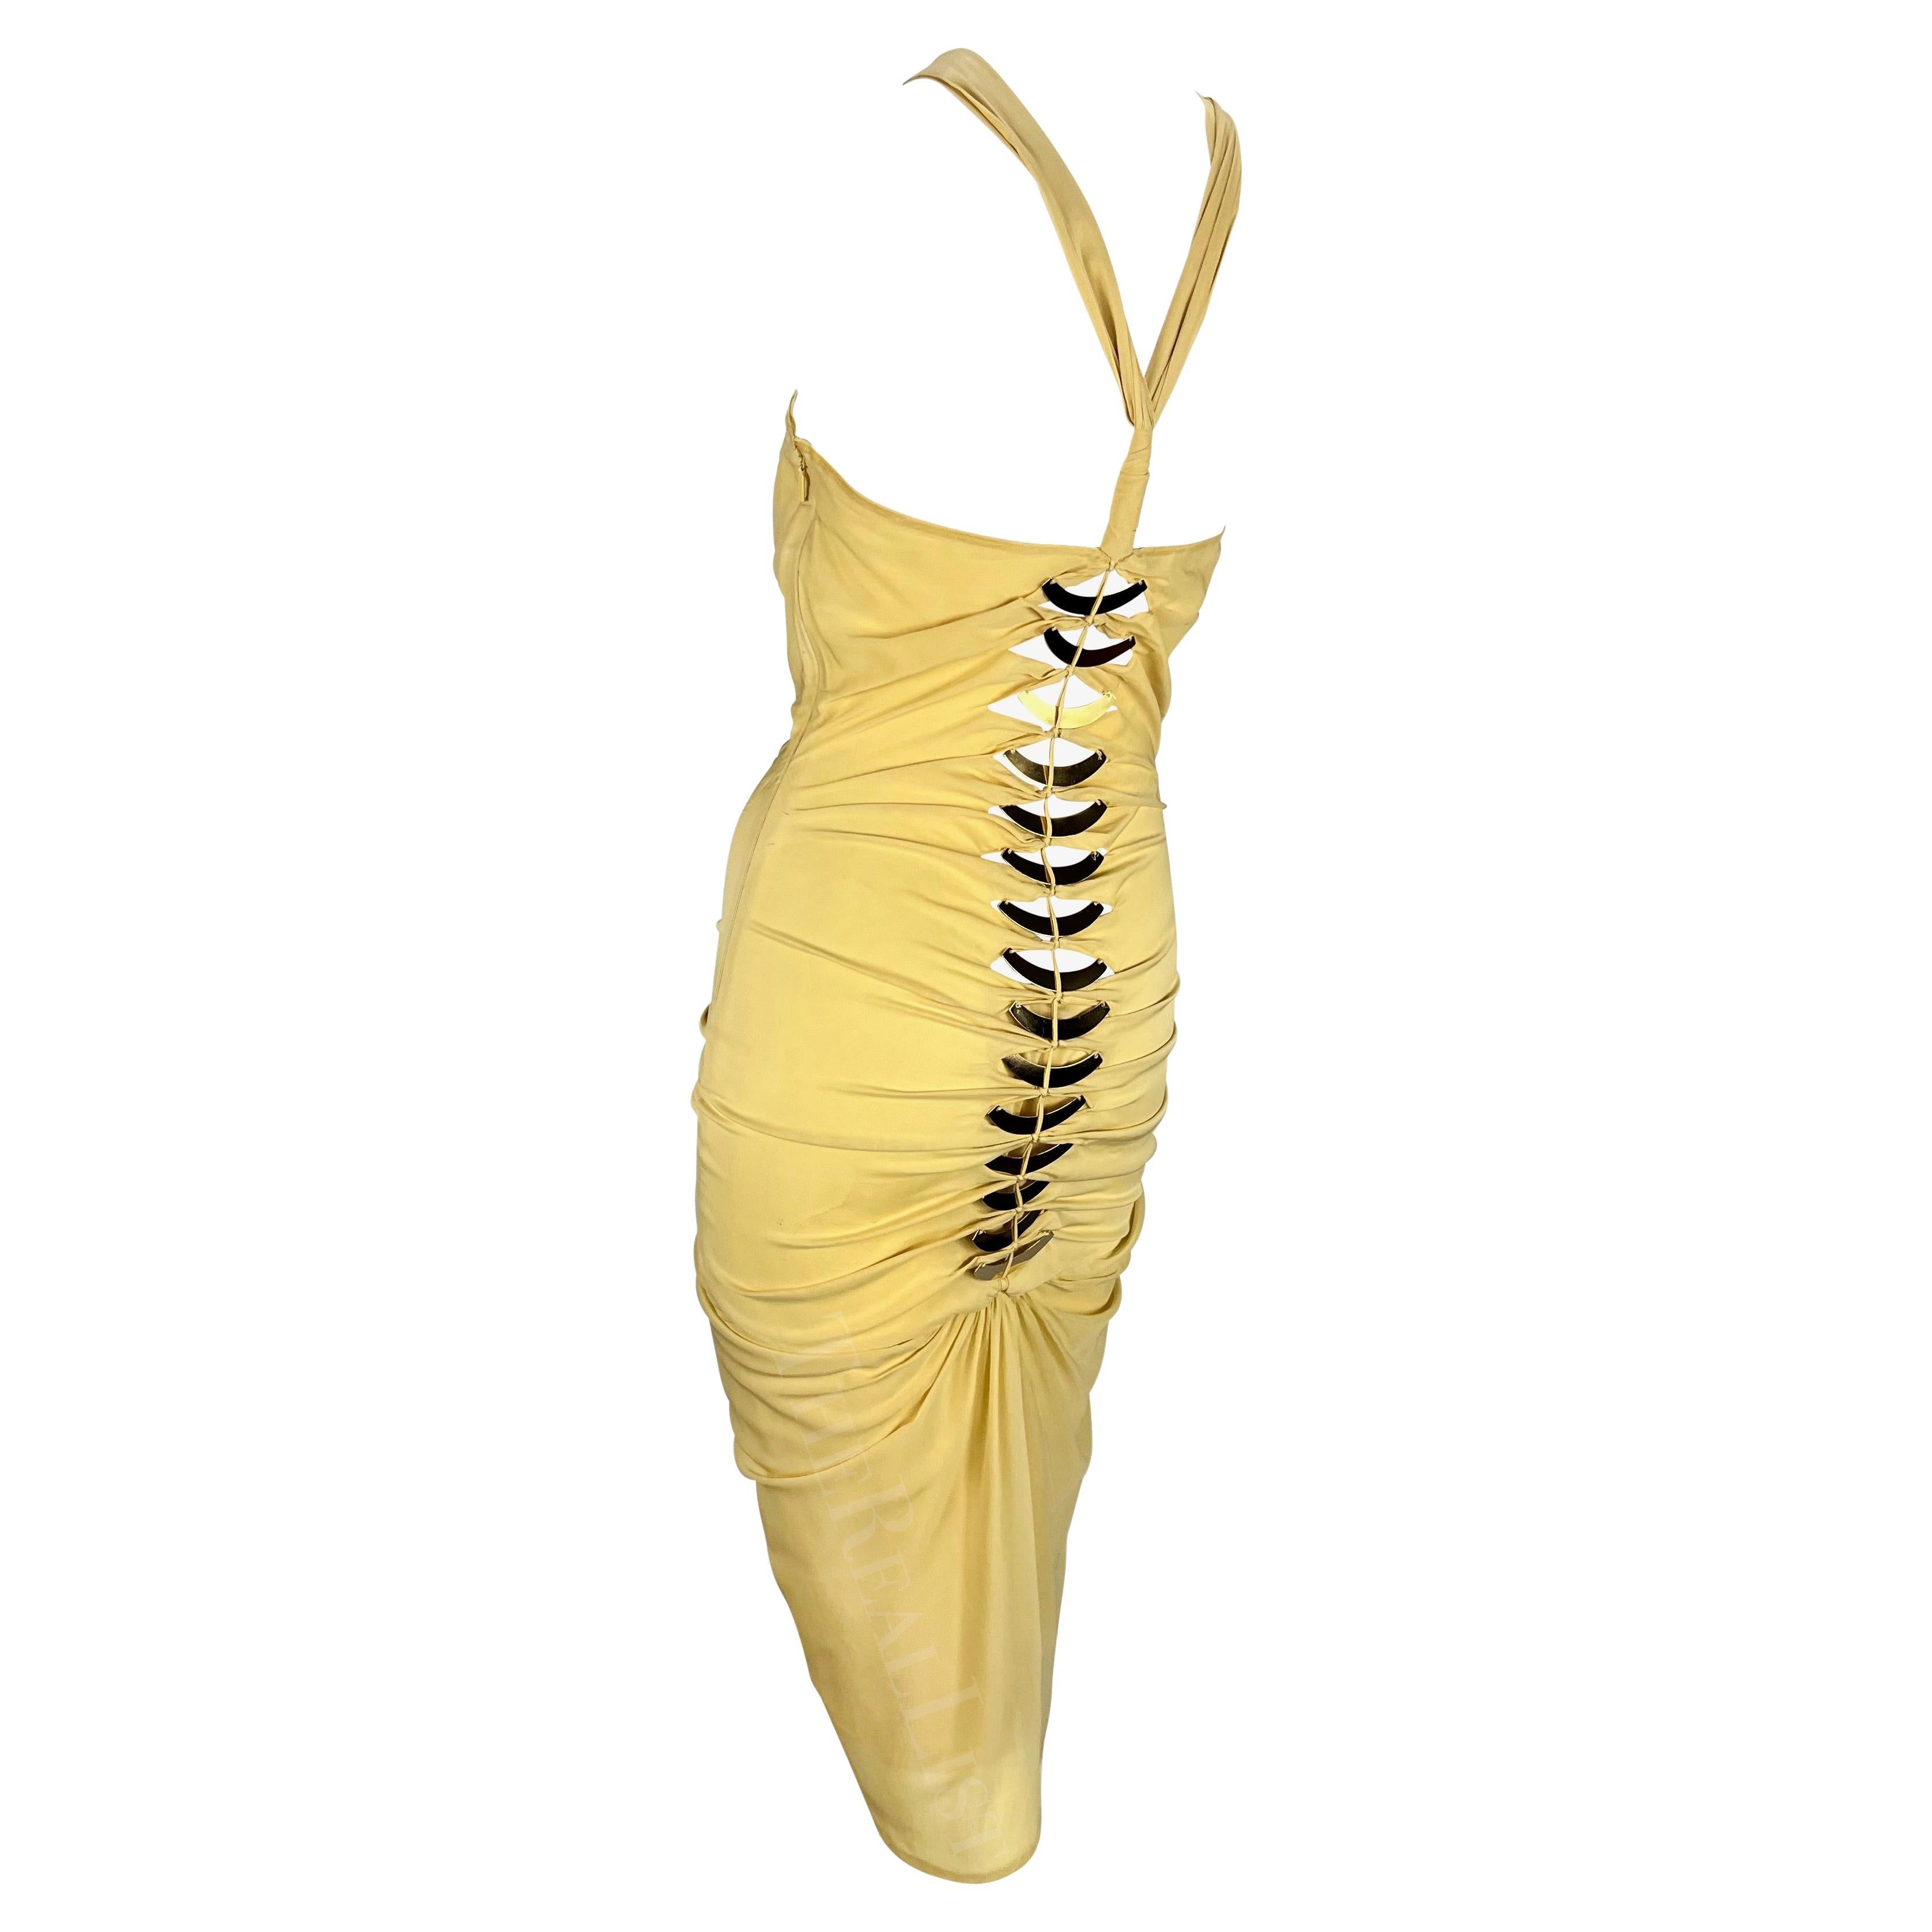 S/S 2005 Gucci Beige Cutout Gold-Tone Metal Spine Bodycon Mini Dress For Sale 2